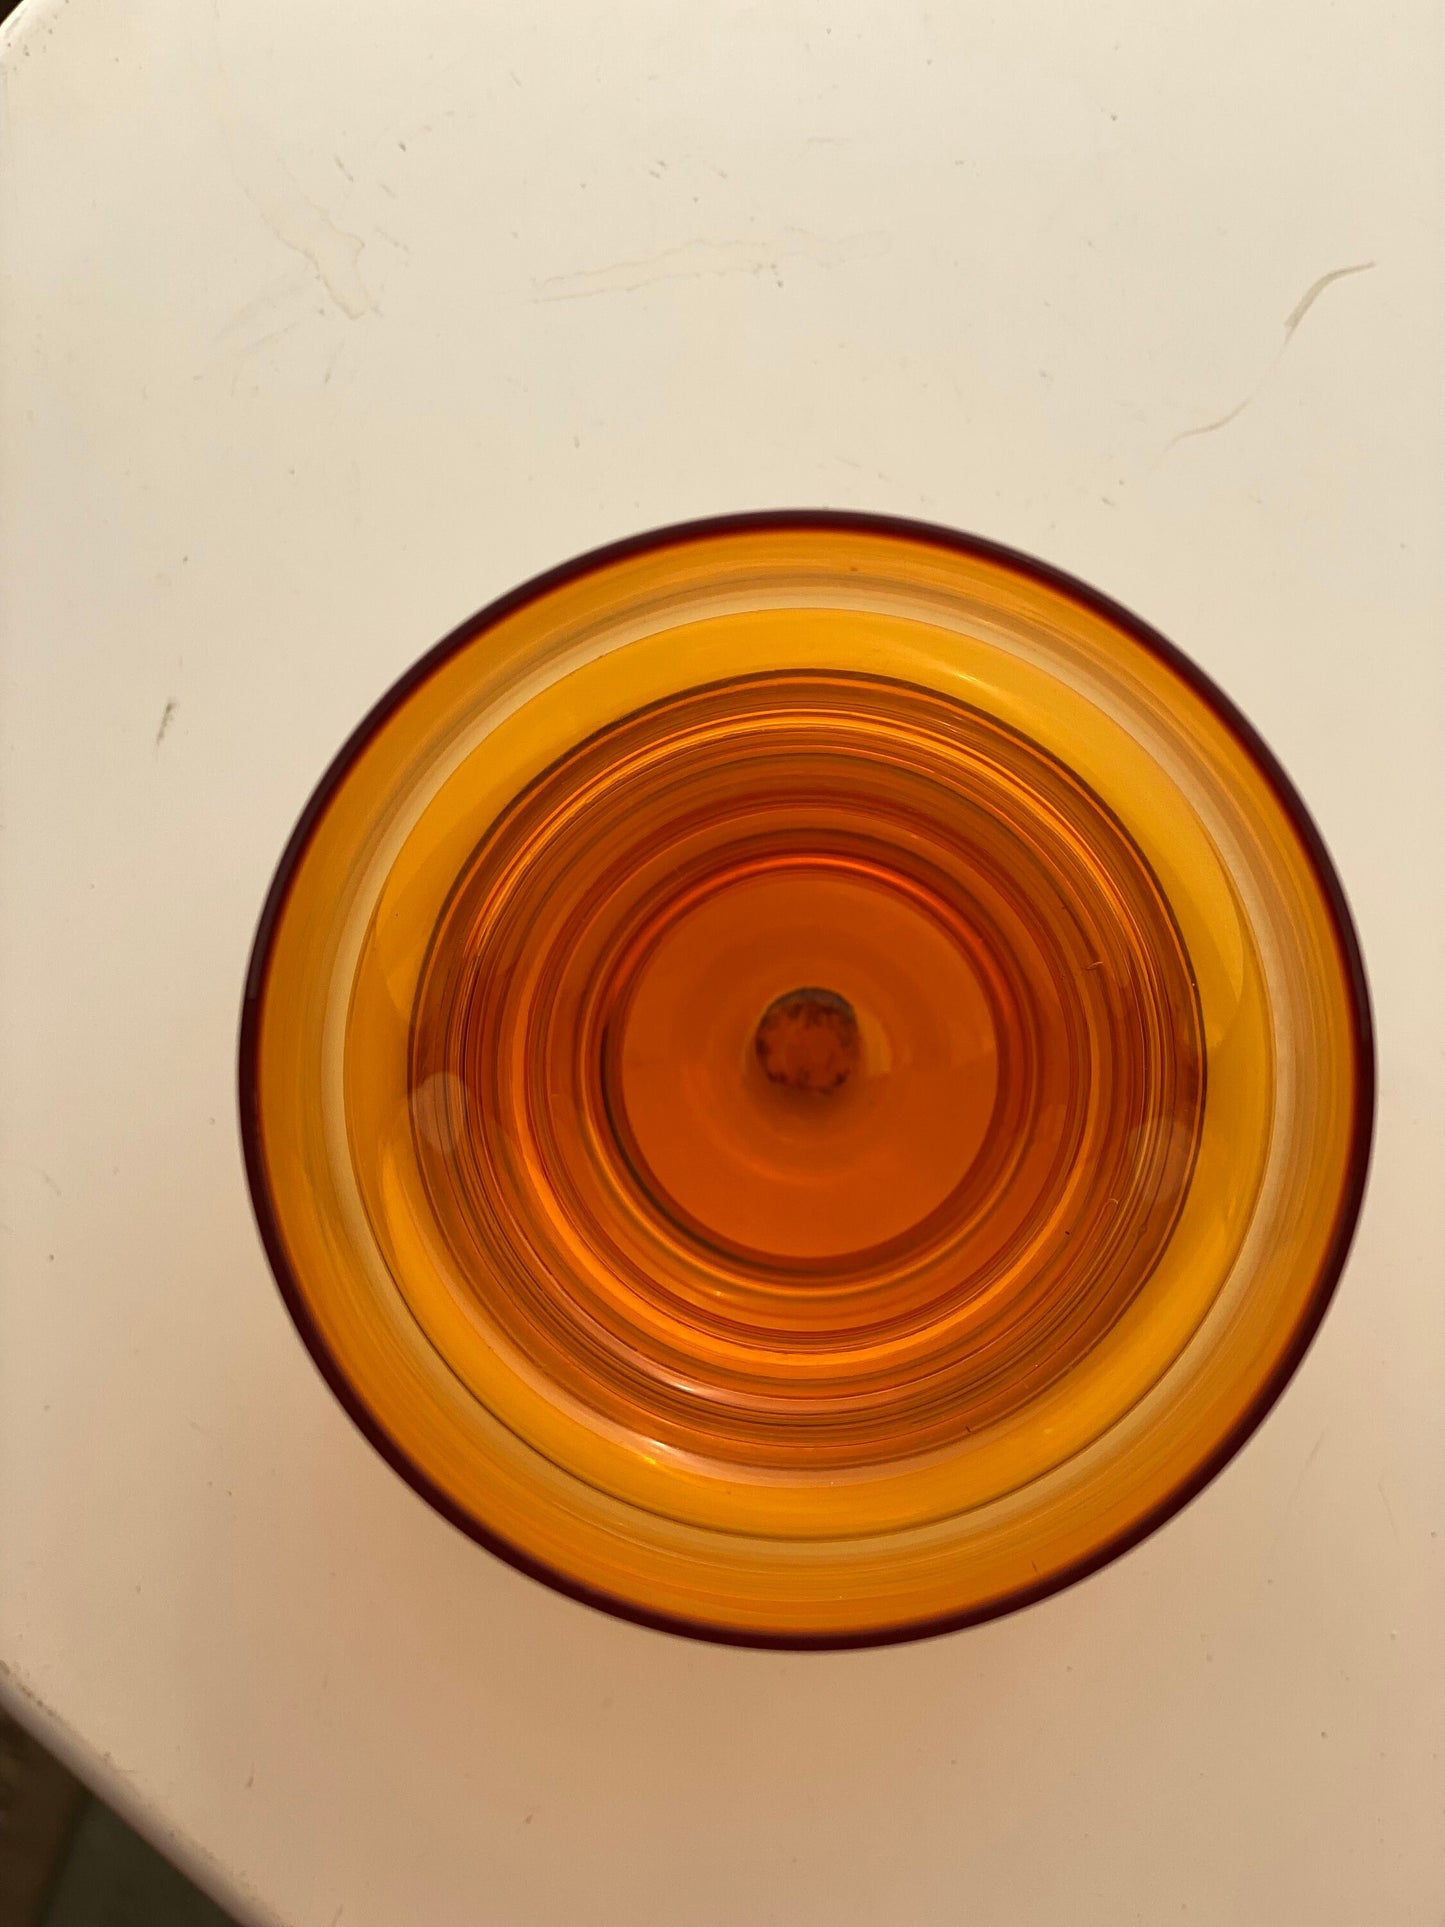 Lindshammar Gunnar Ander Swedish Orange Glass Vase in Wonderful Orange